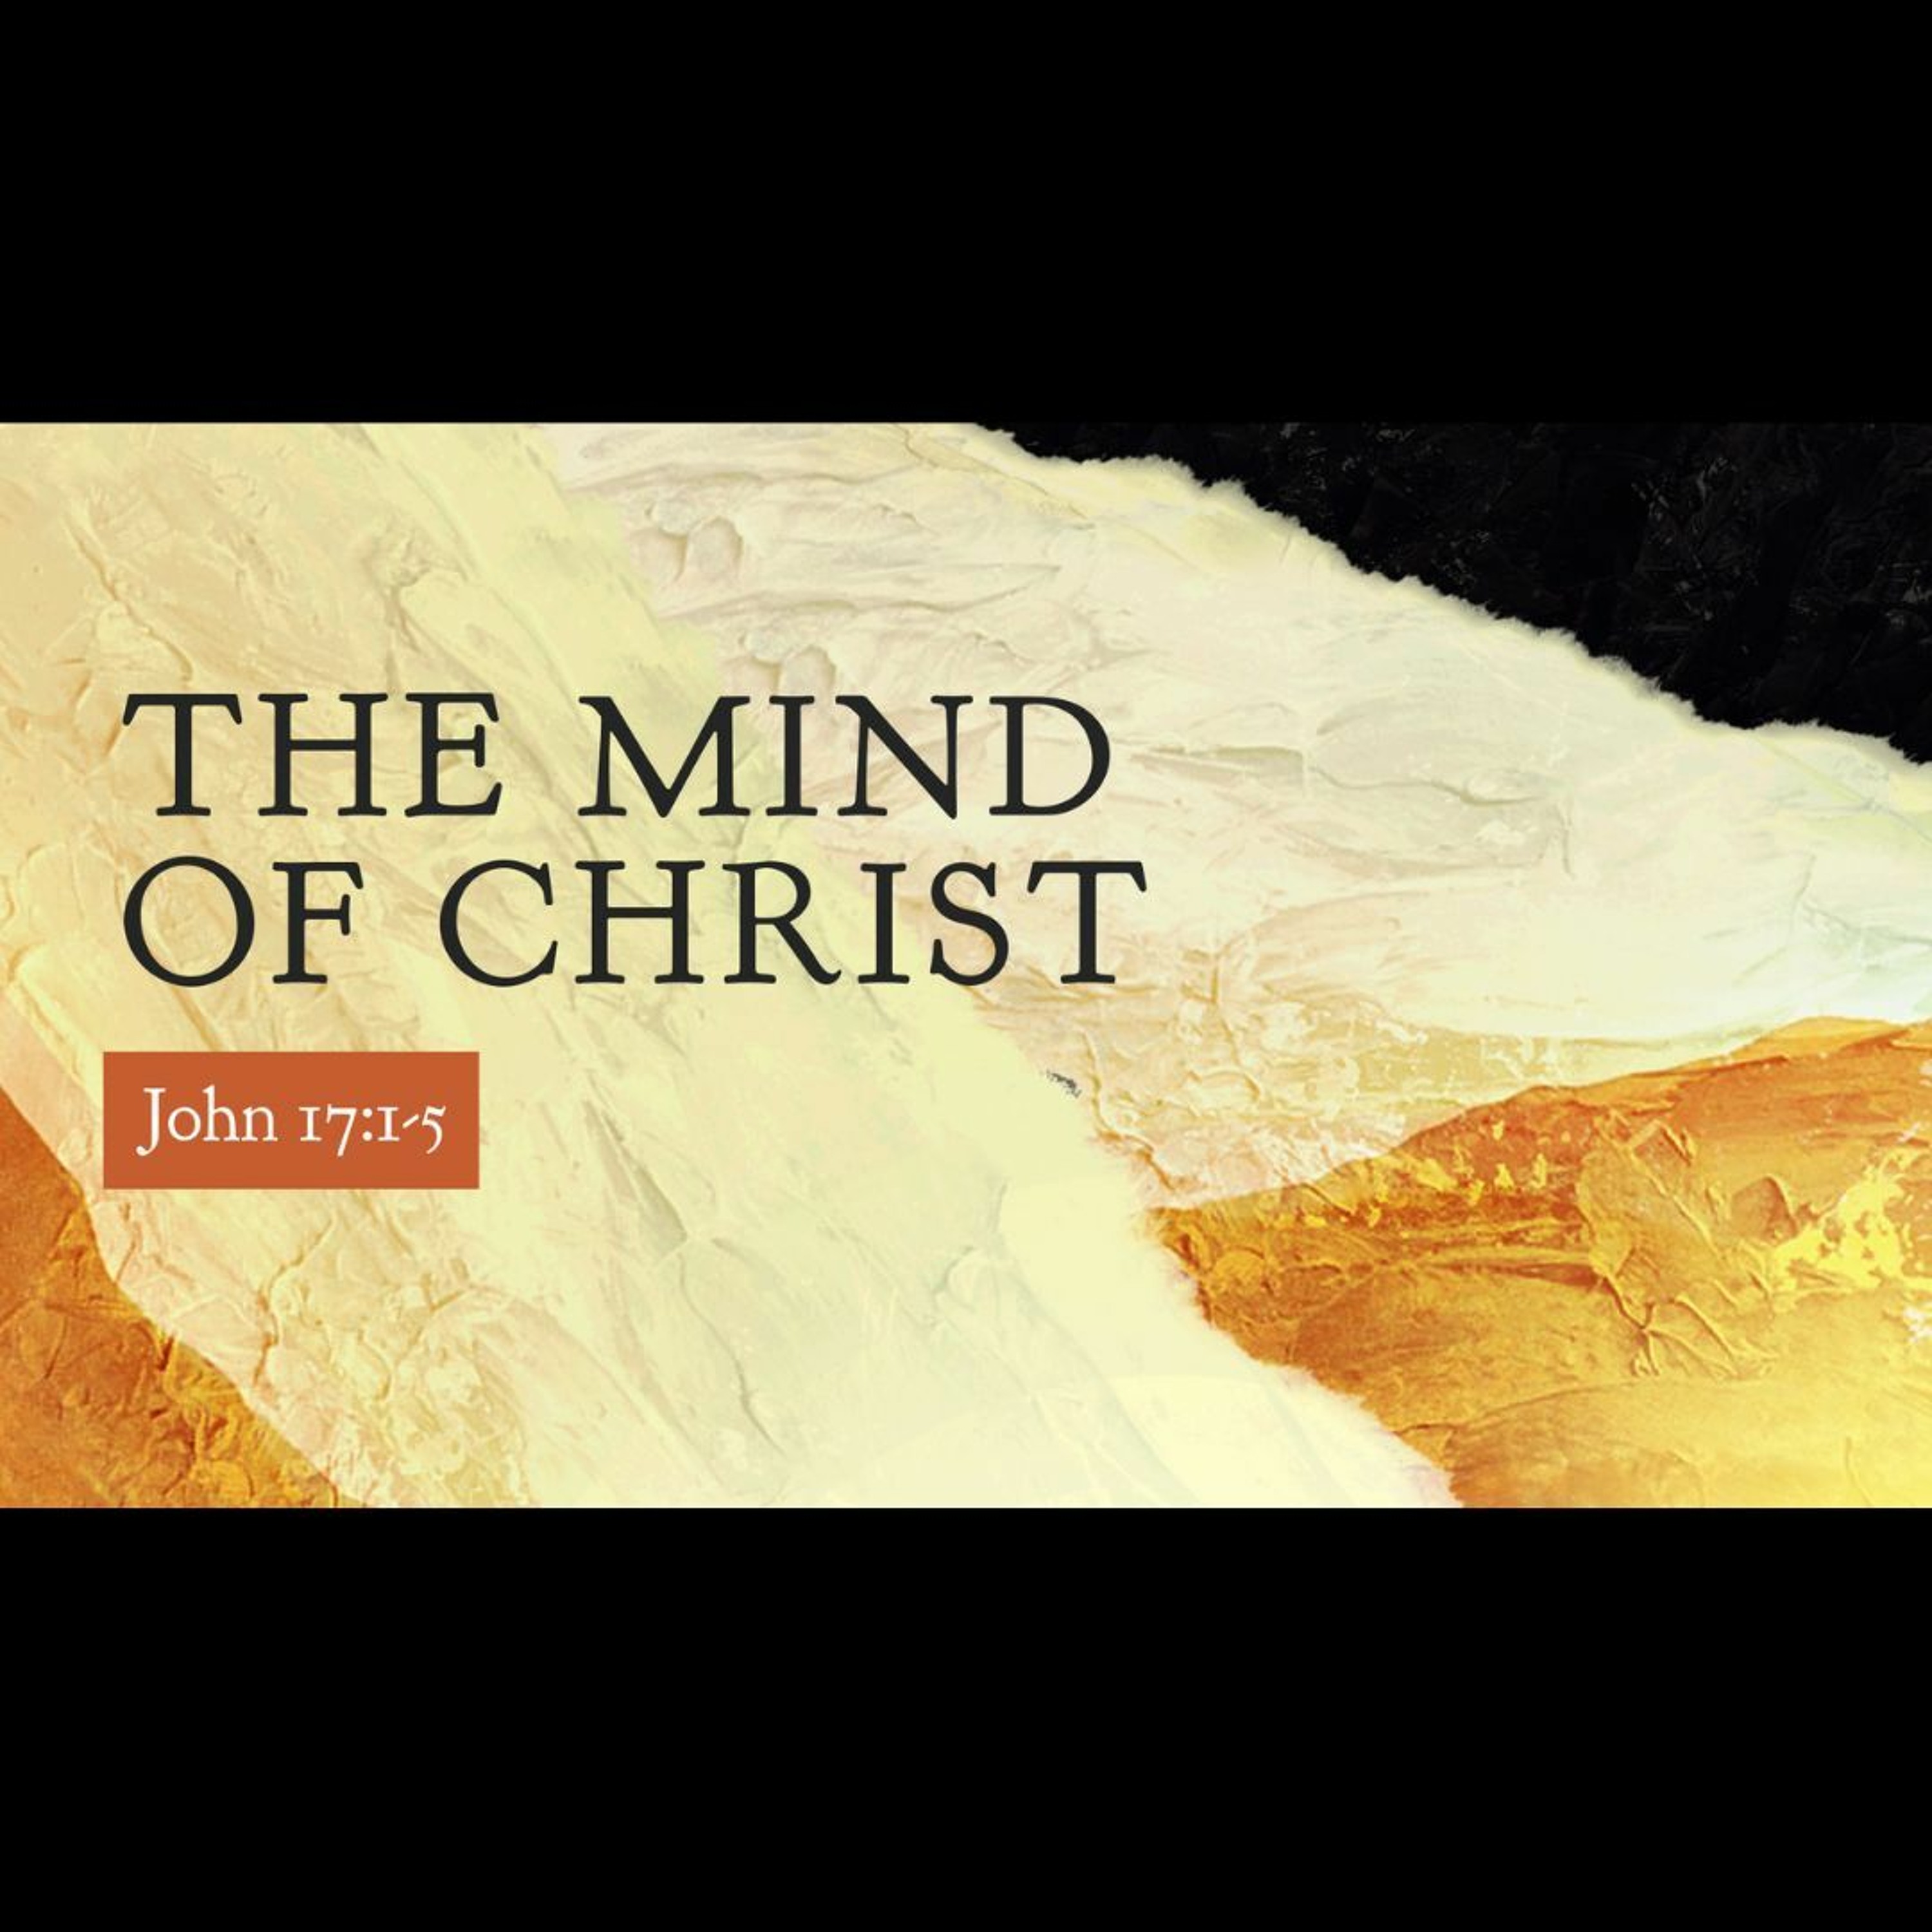 The Mind of Christ (John 17:1-5)